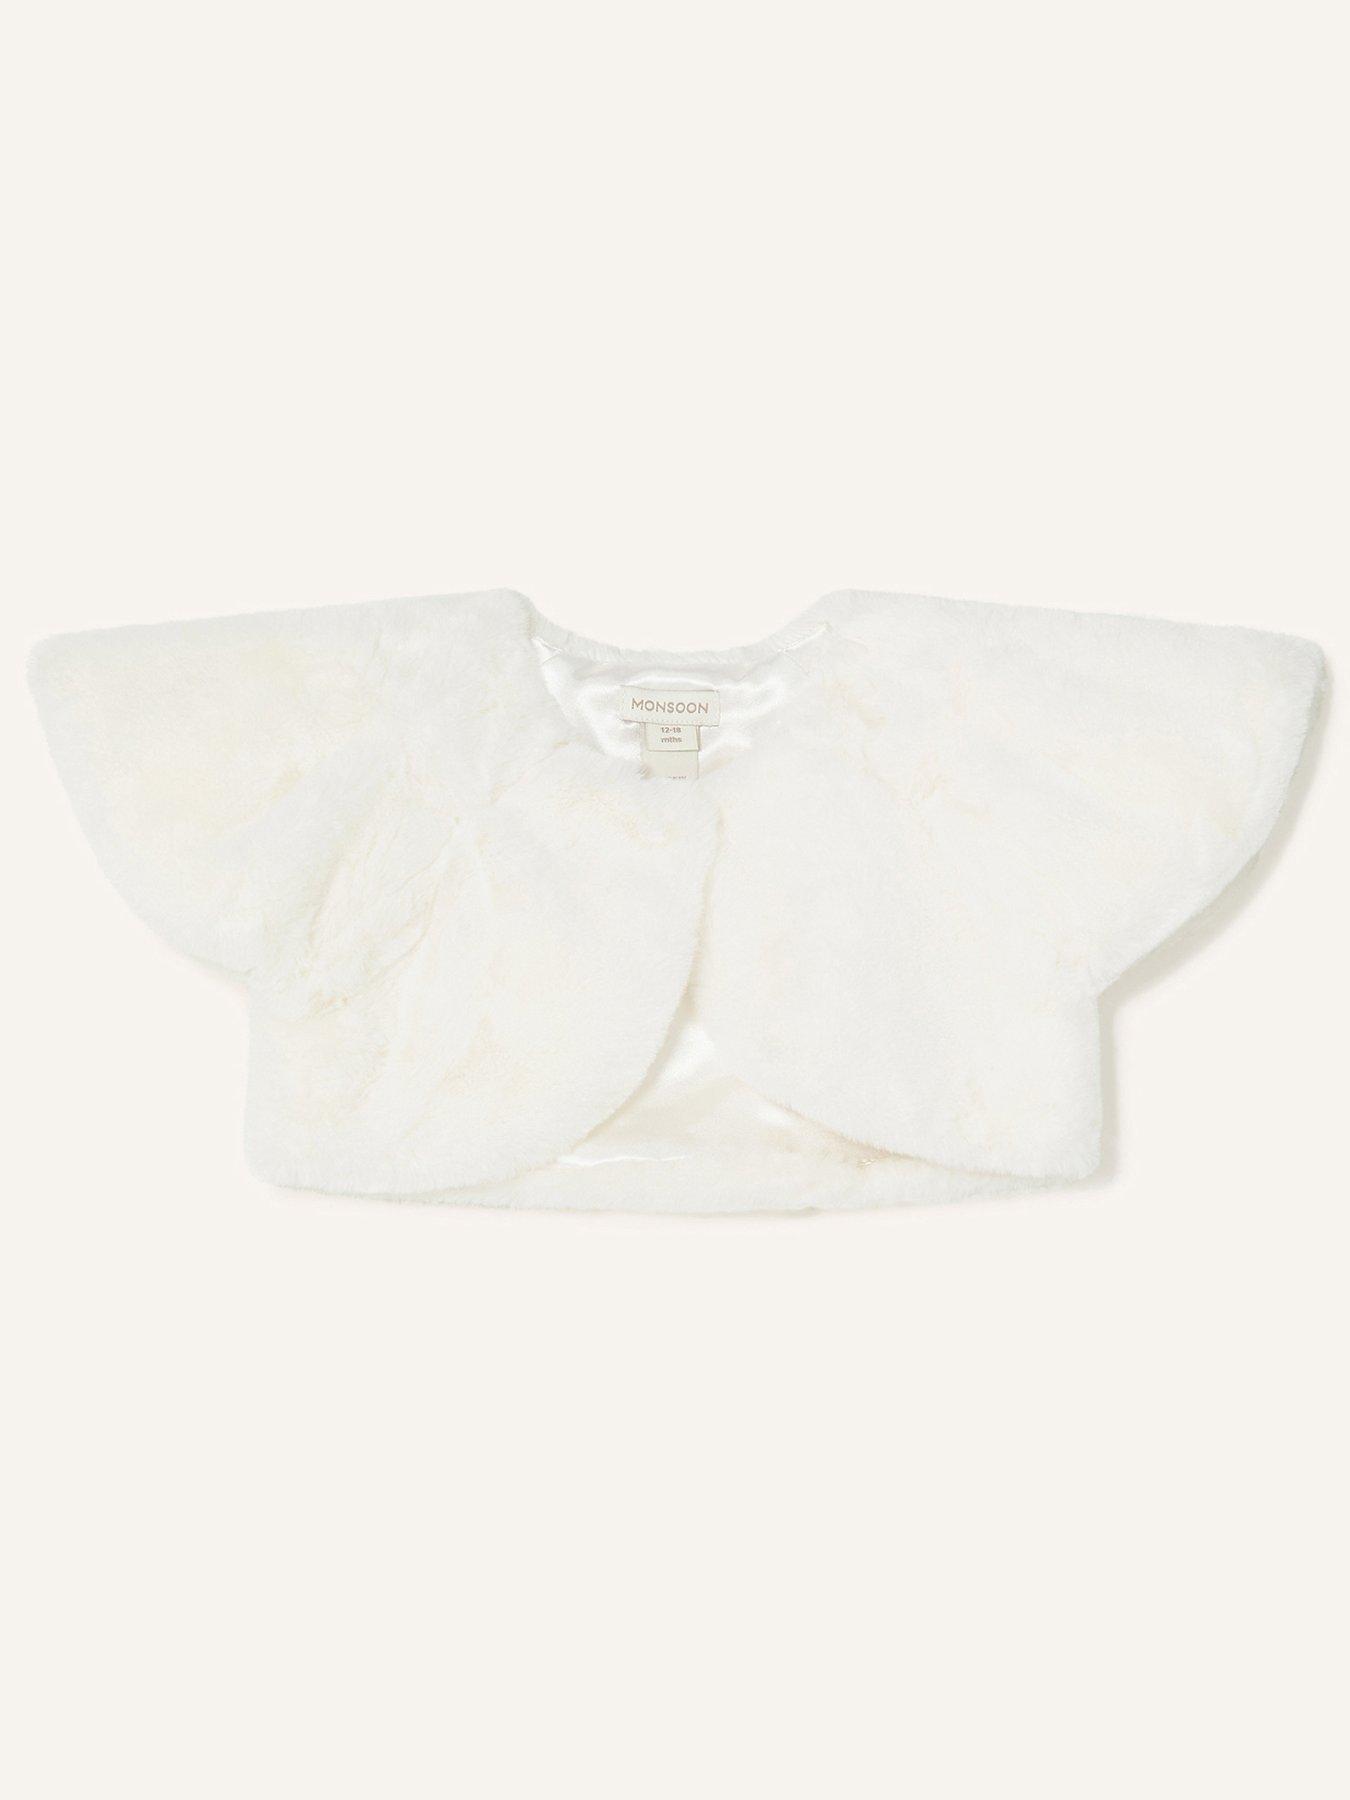 Lilax Baby Girls' Knit Long SleeveBolero Cardigan Shrug 9-12 Months White 